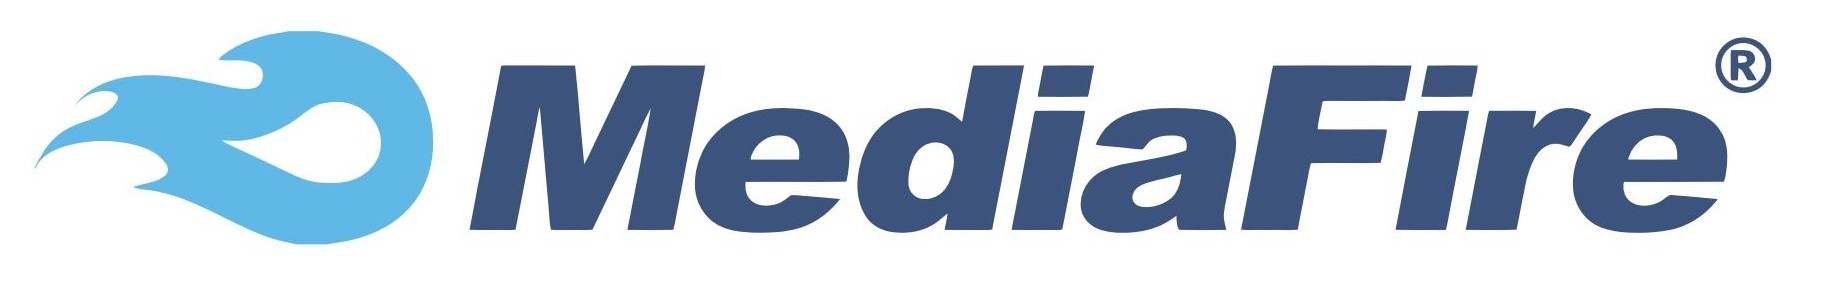 MediaFire Logo png